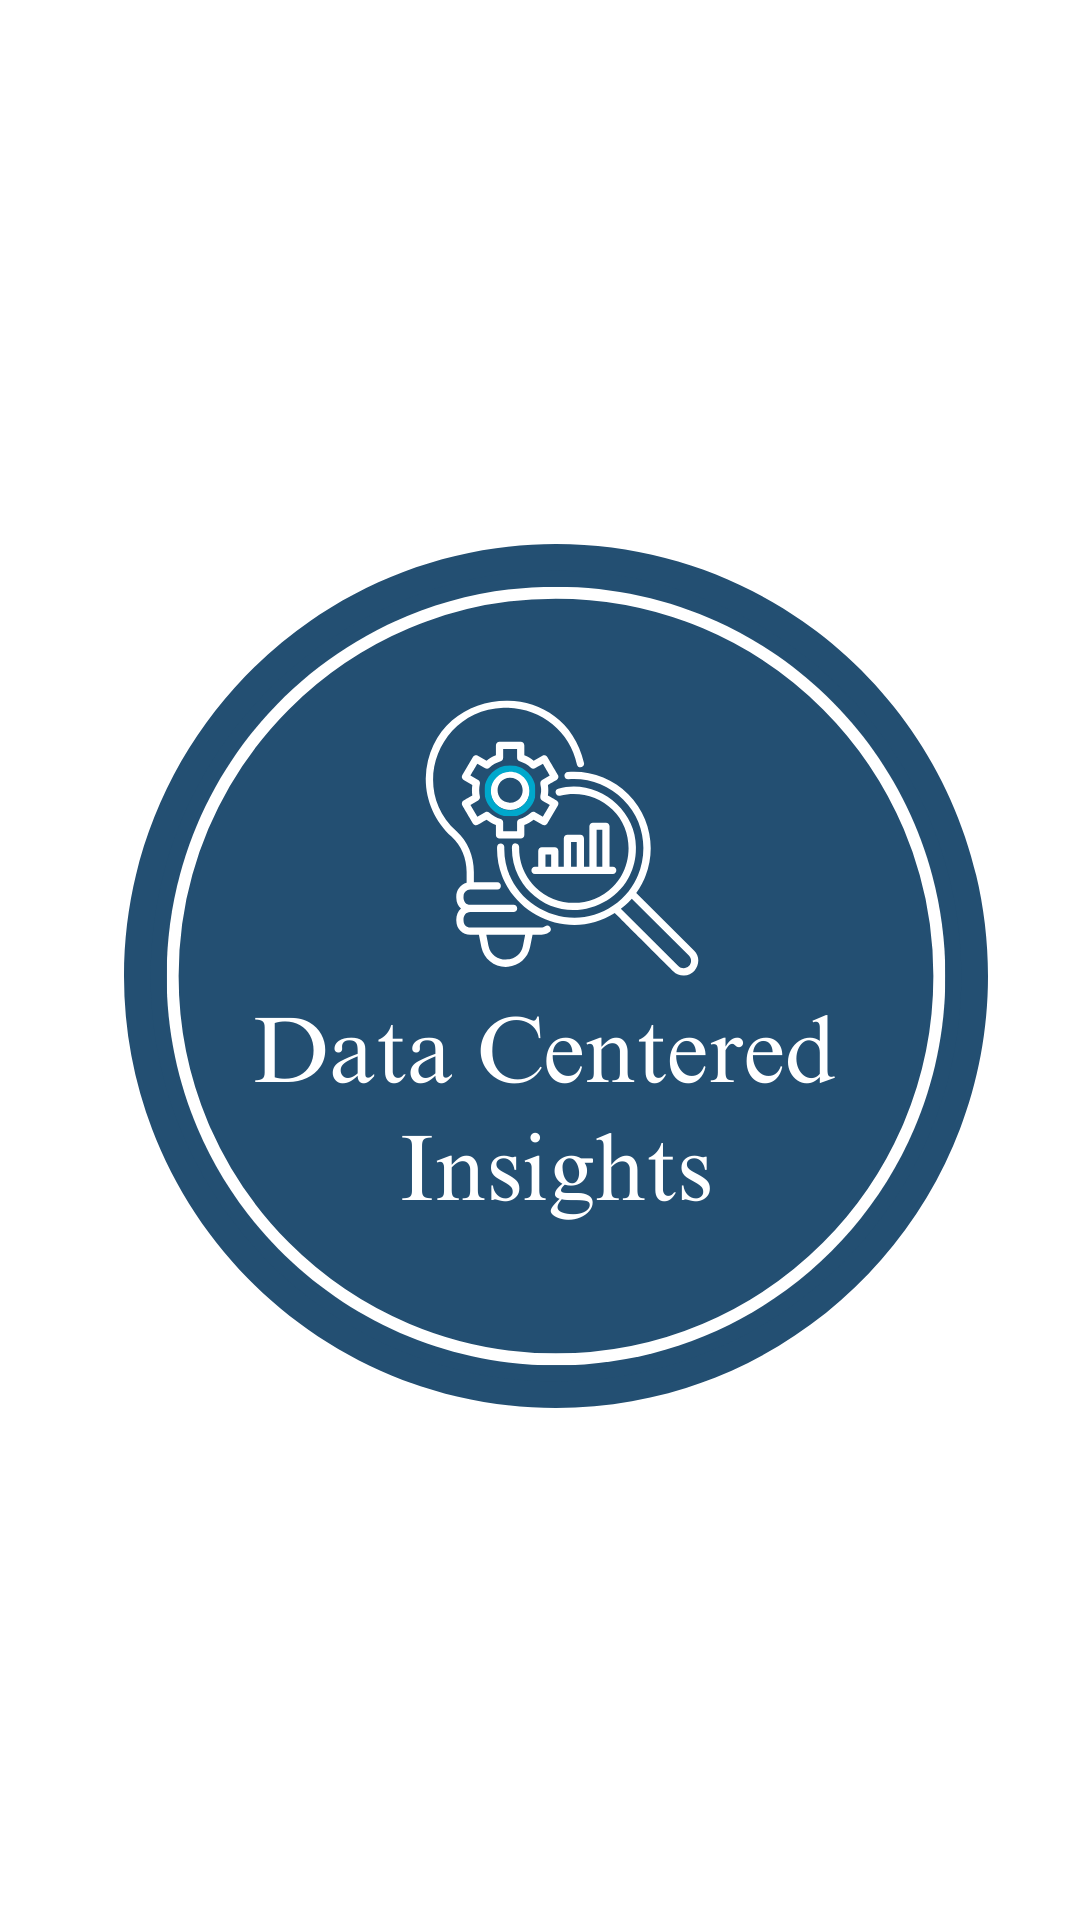 Data Centered Insights